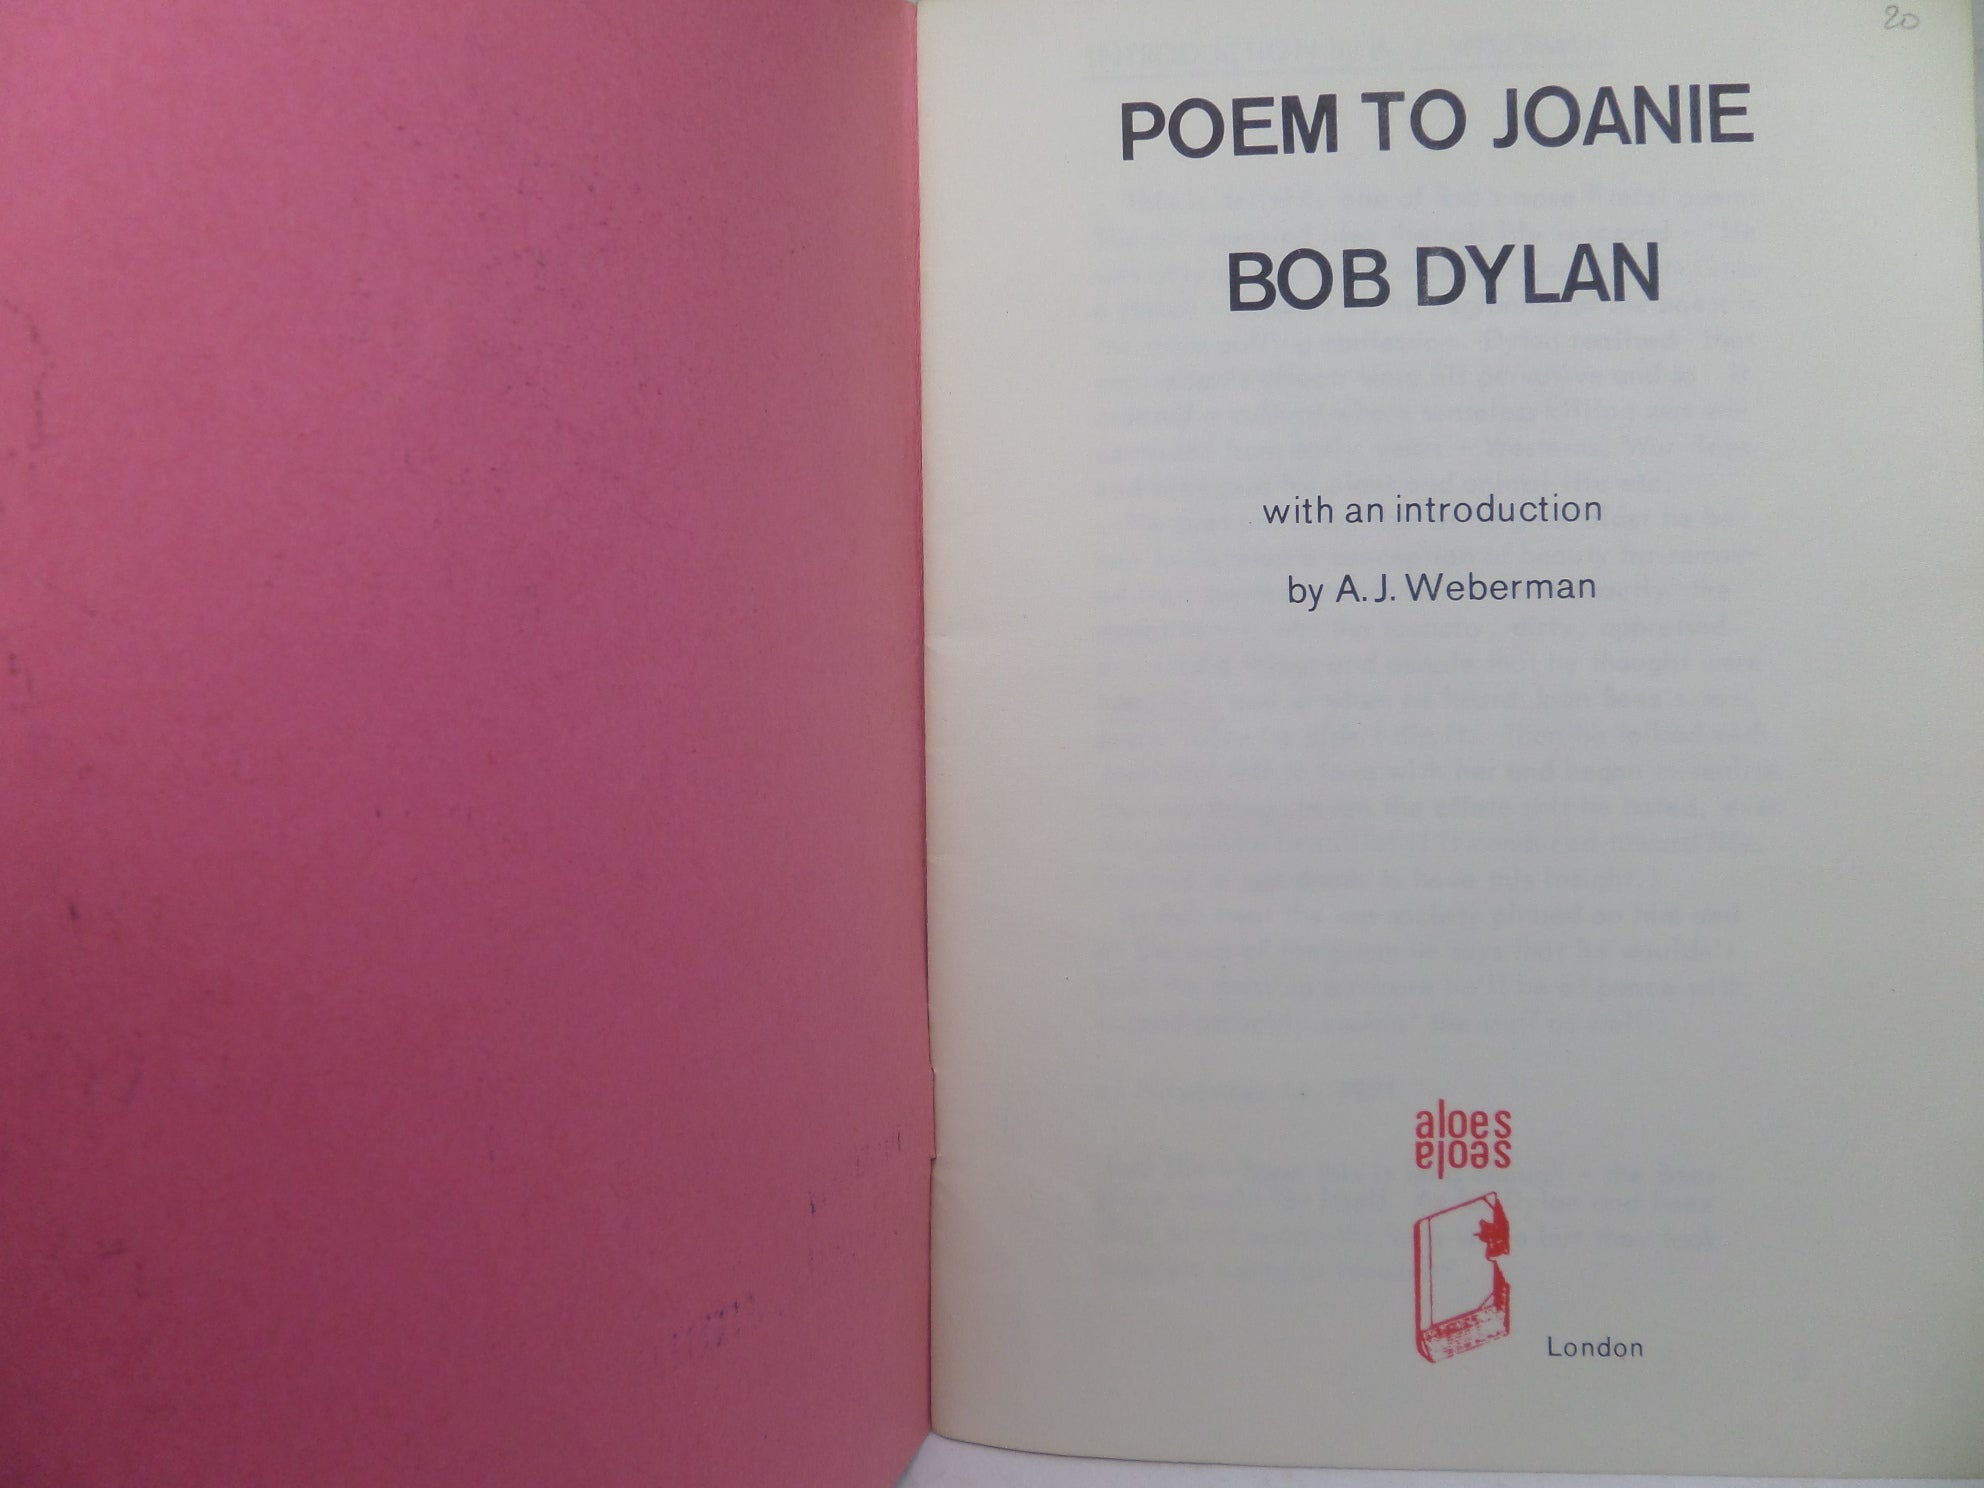 POEM TO JOANIE BY BOB DYLAN 1971